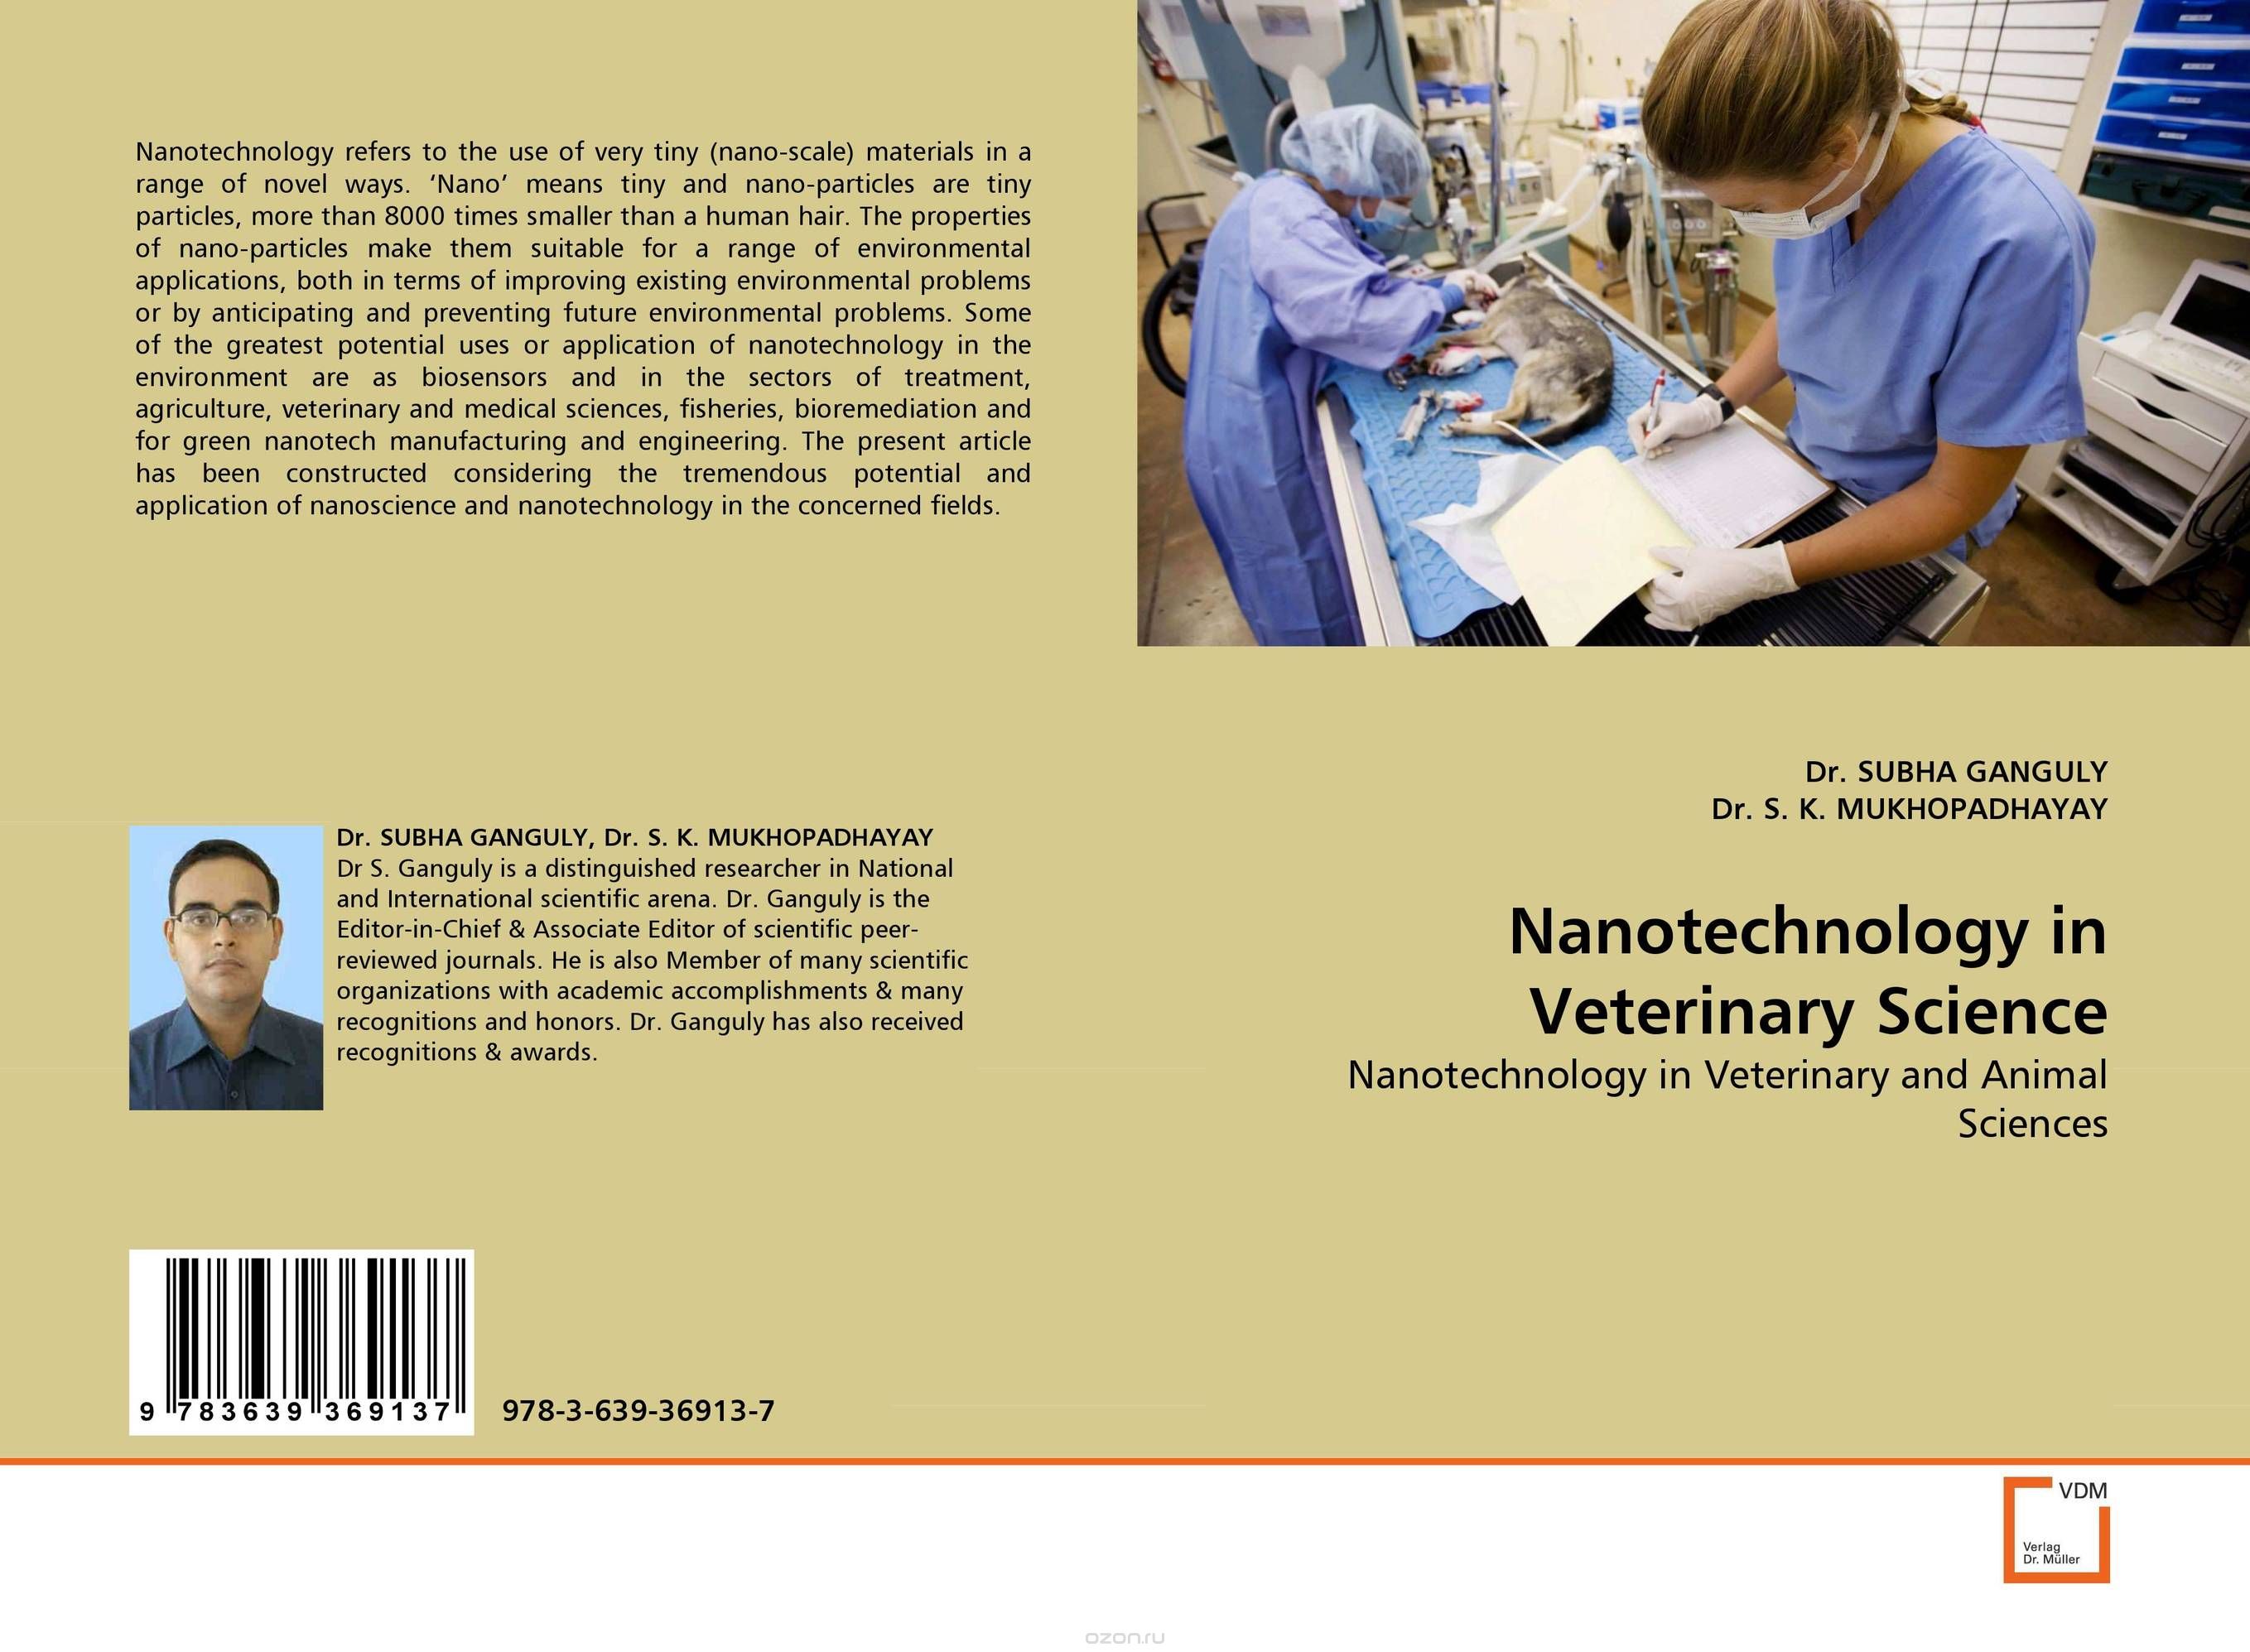 Nanotechnology in Veterinary Science